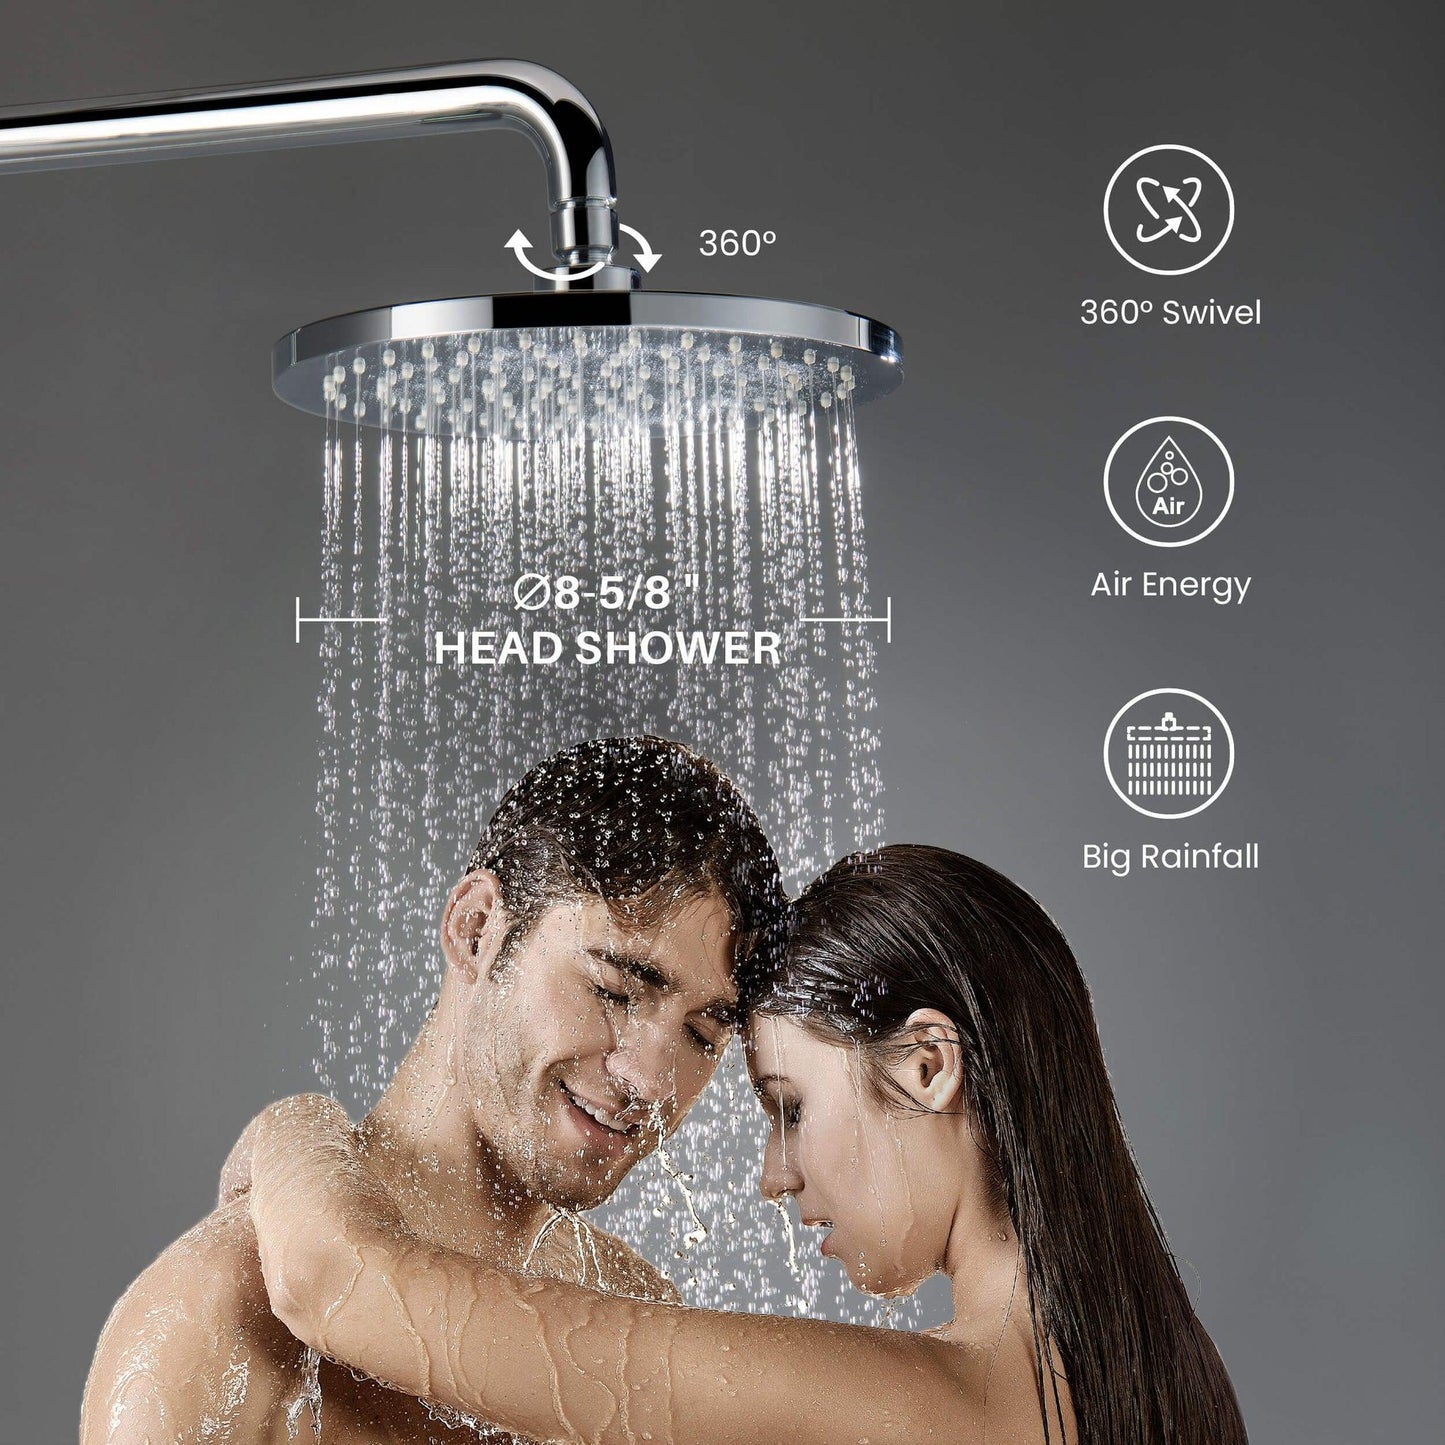 KIBI Circular Shower Column With Dual Function Shower Head in Chrome Finish